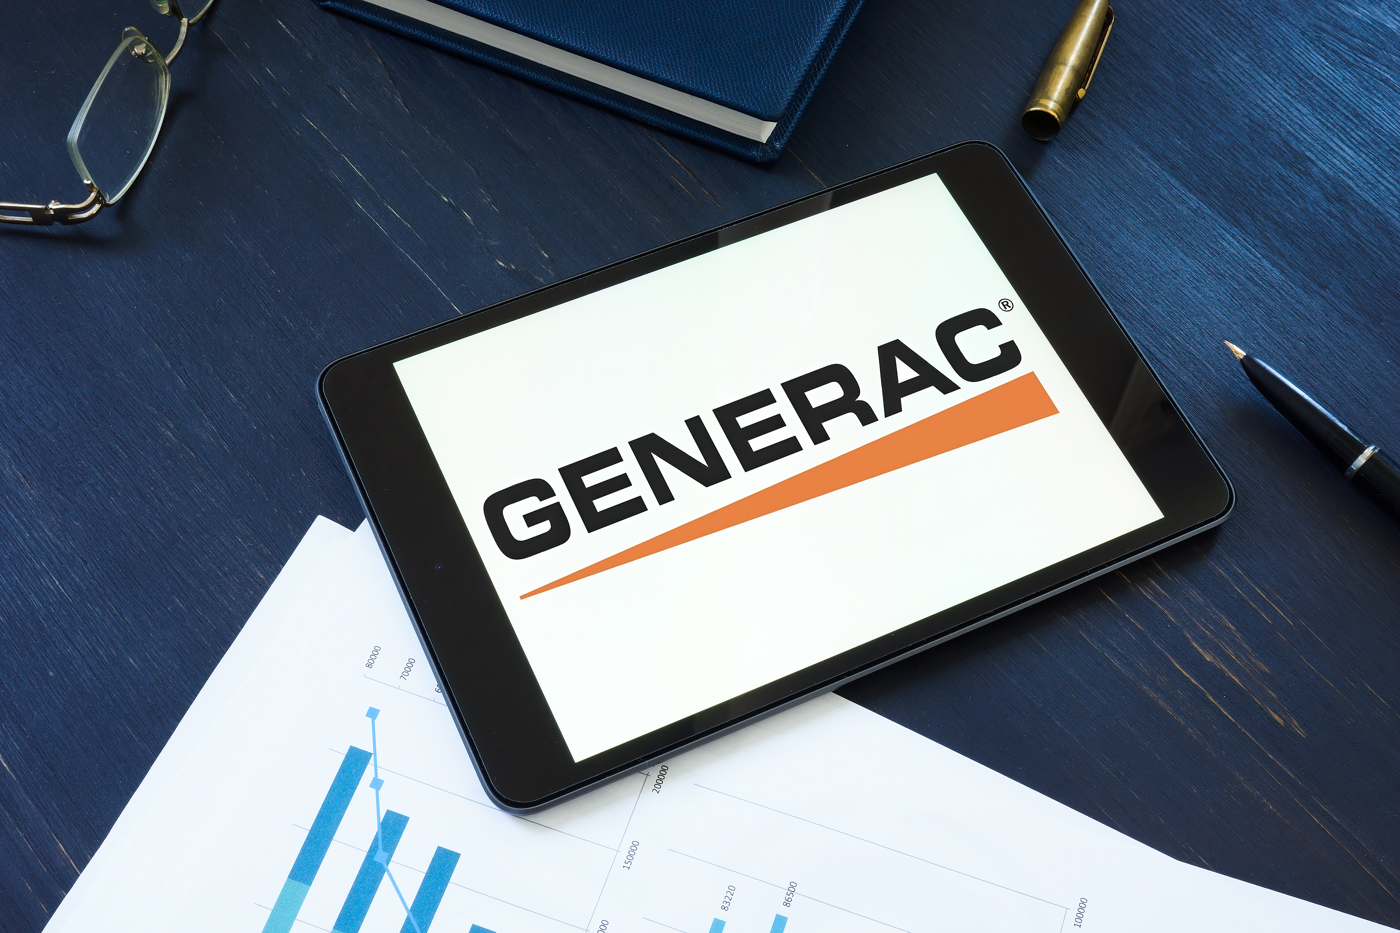 Generac Holdings stock, Generac stock, GNRC stock